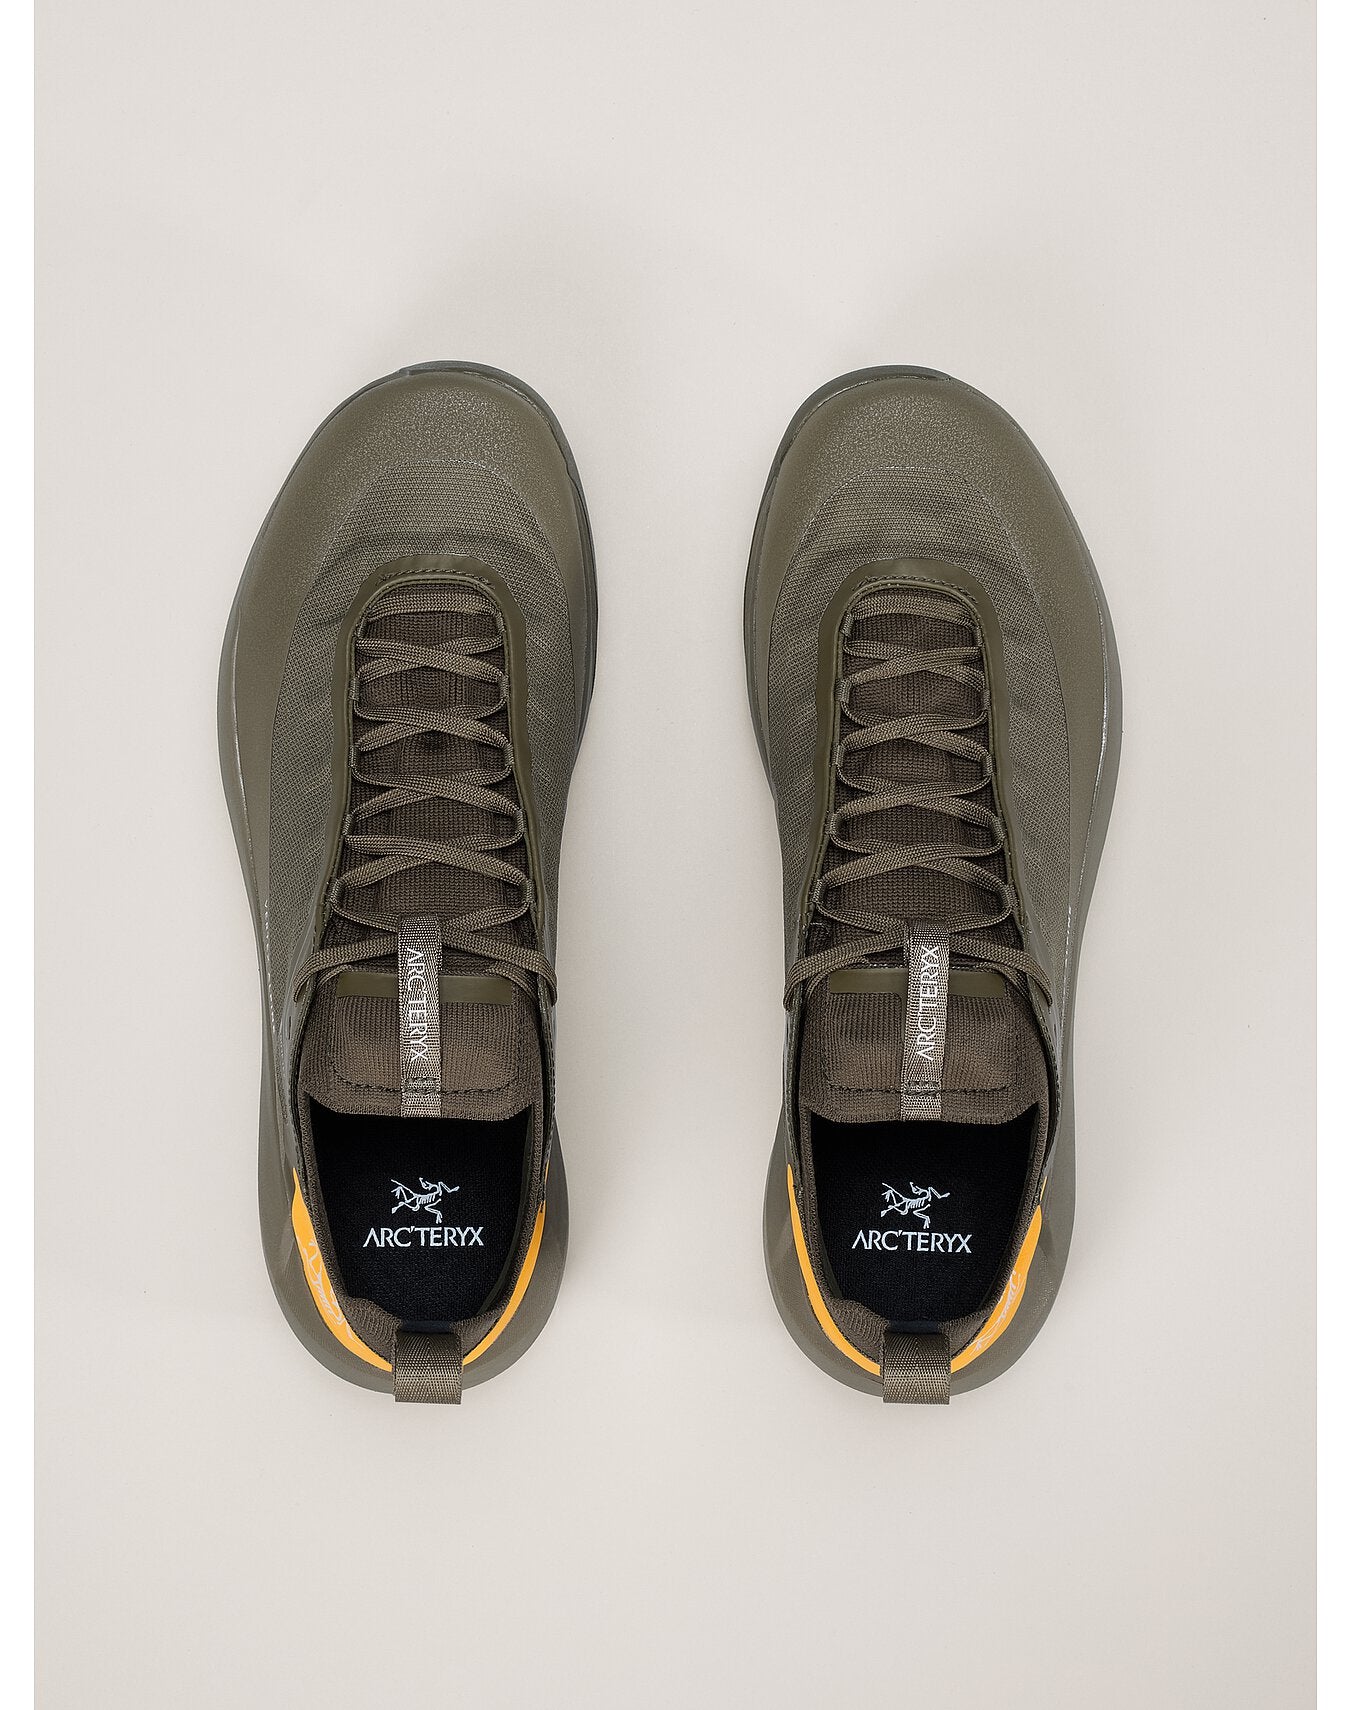 Arc'teryx Men's Vertex Alpine GTX Shoes